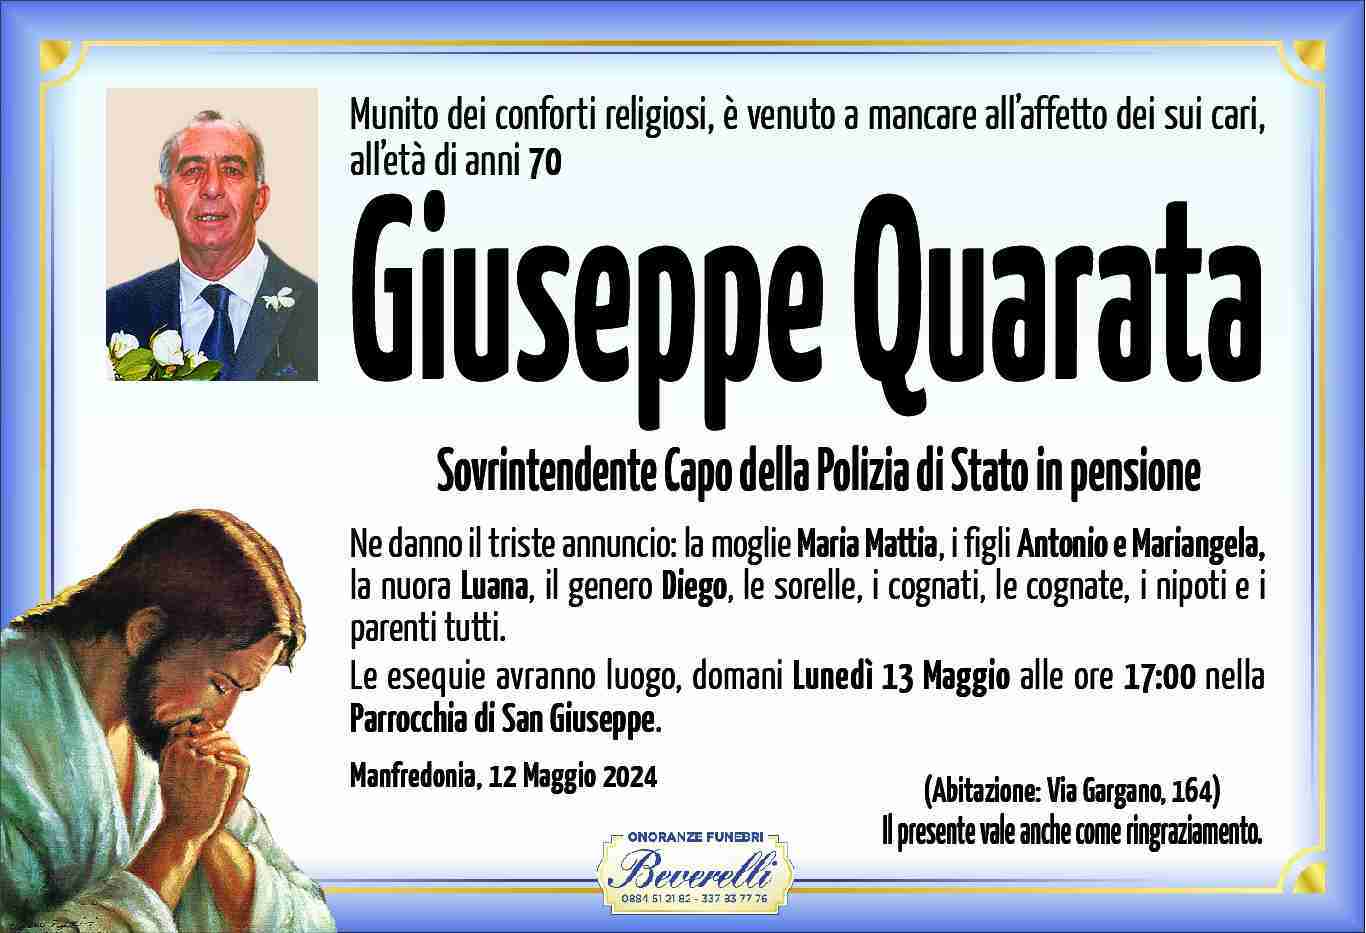 Giuseppe Quarata